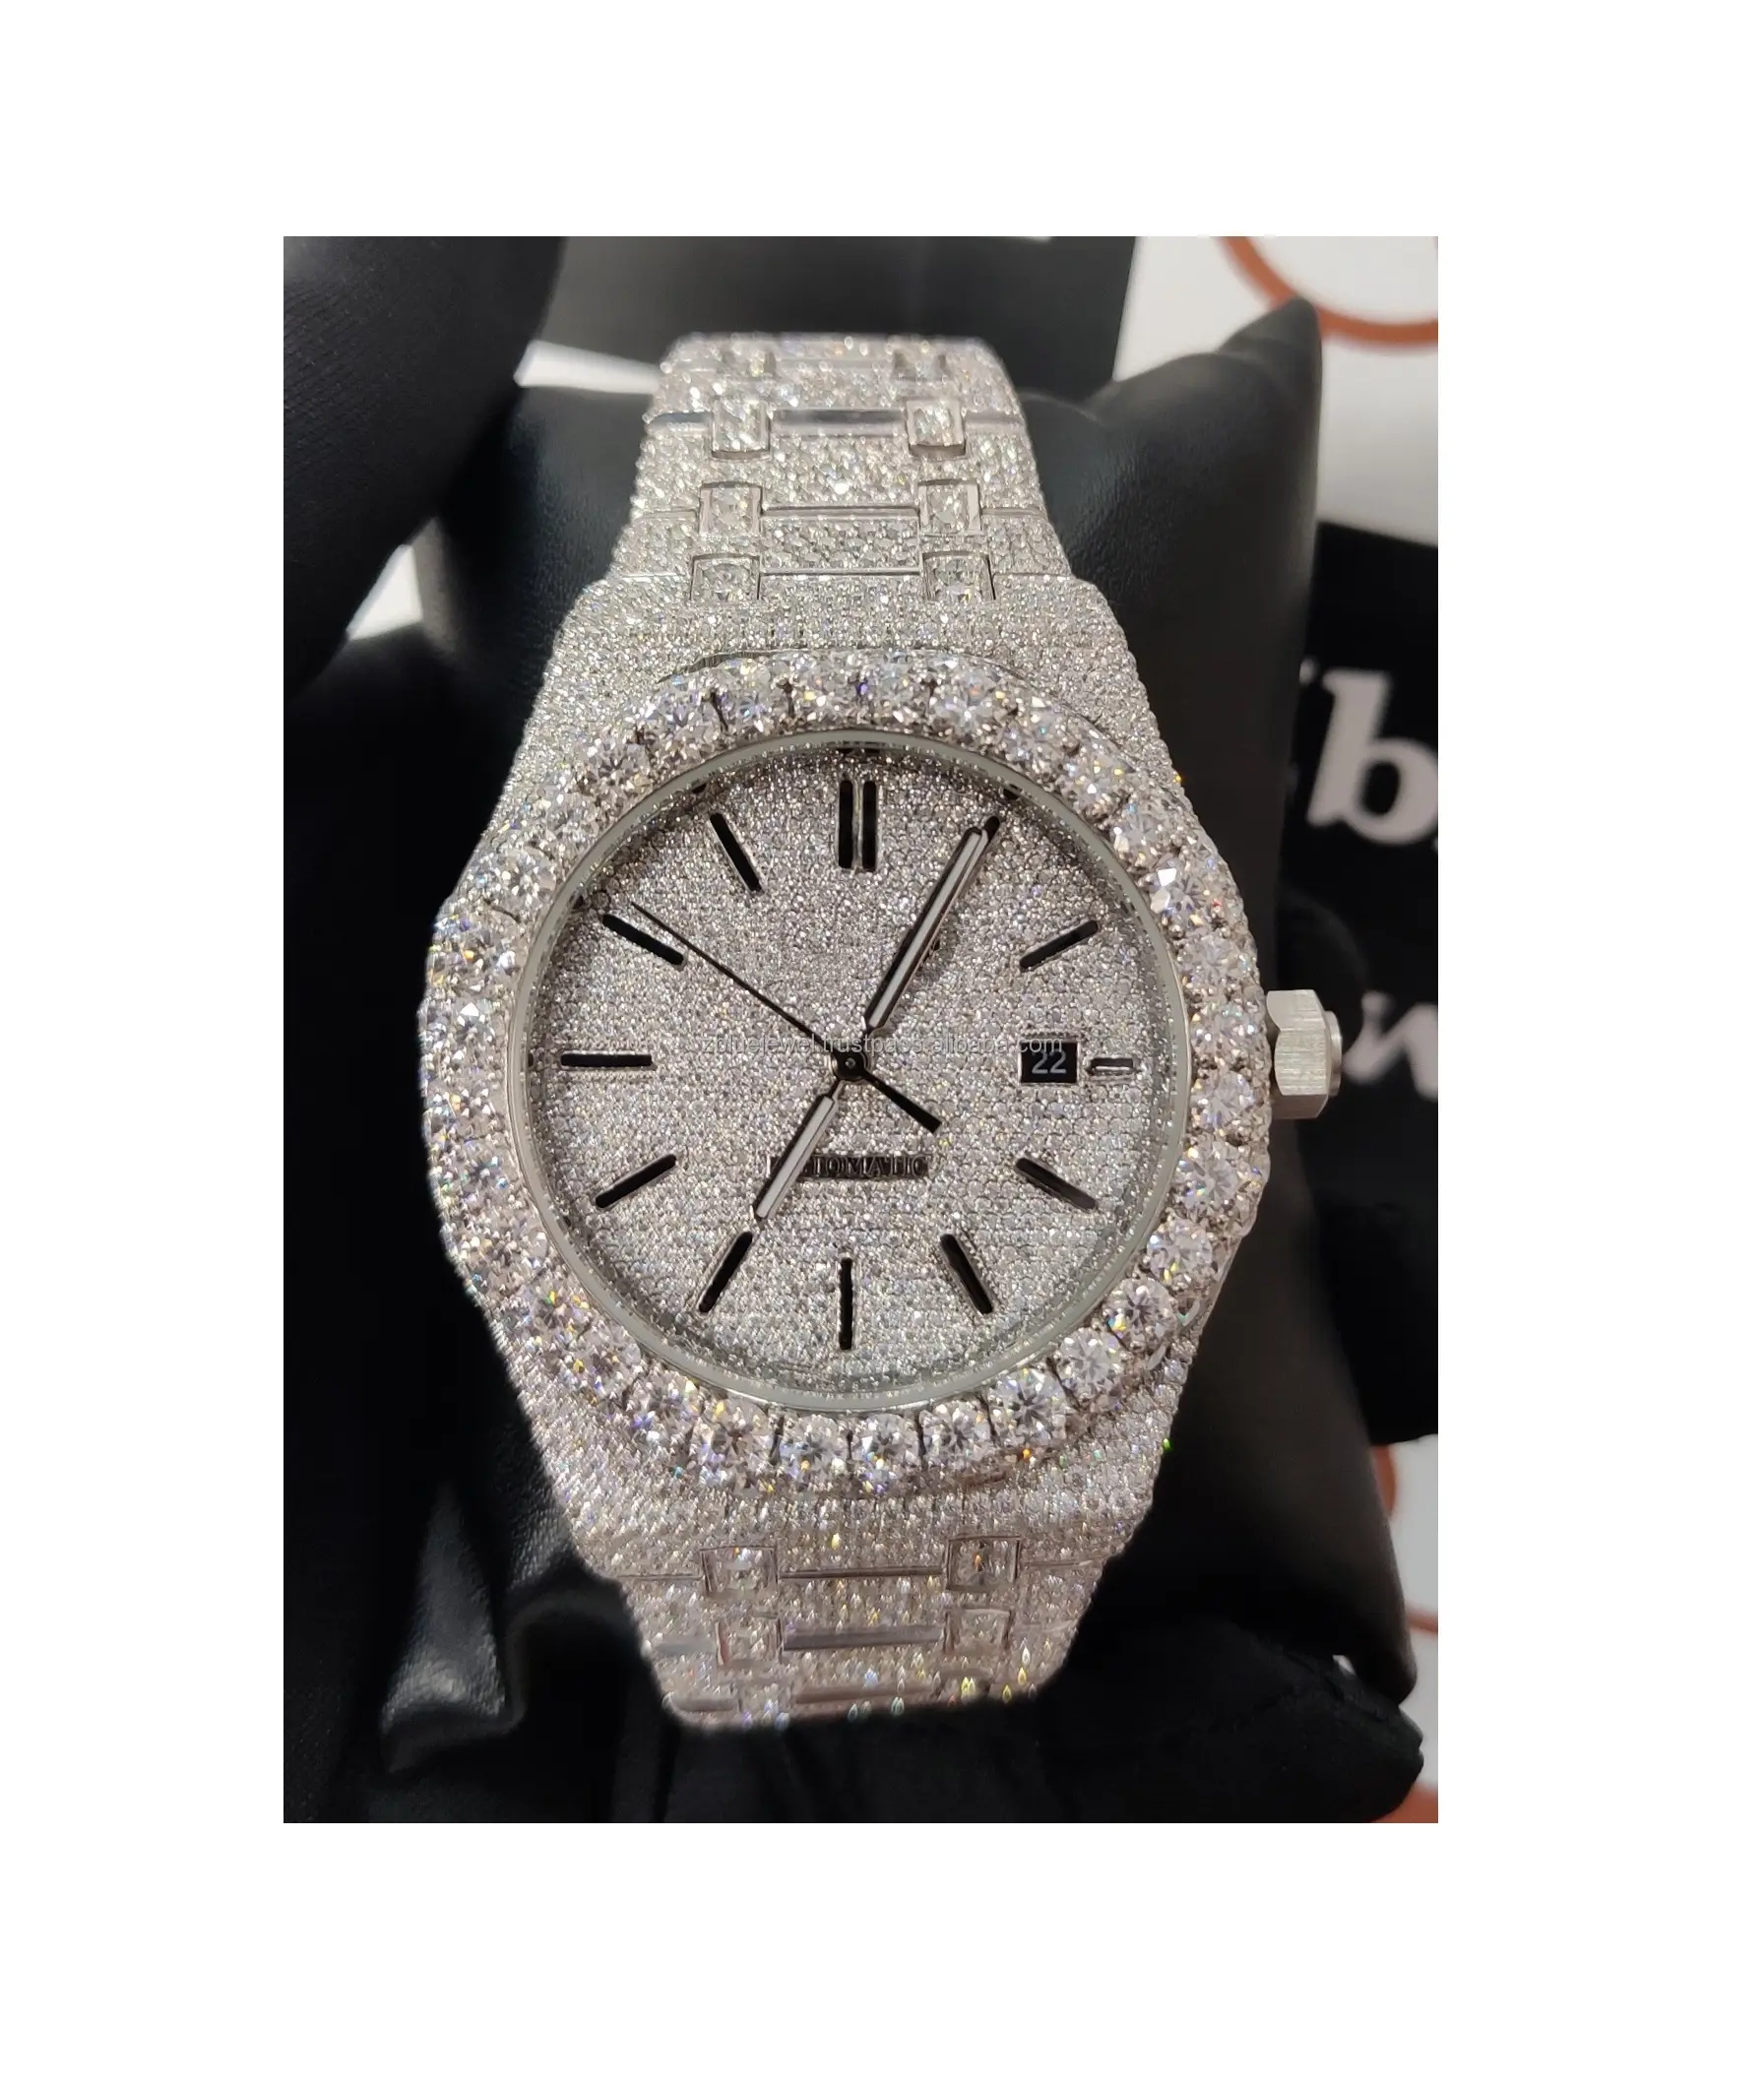 41MM Handmade Premium Luxury High Quality Full Iced Out Hip Hop Men Real VVS Moissanite Diamond Watch For Worldwide Exporter